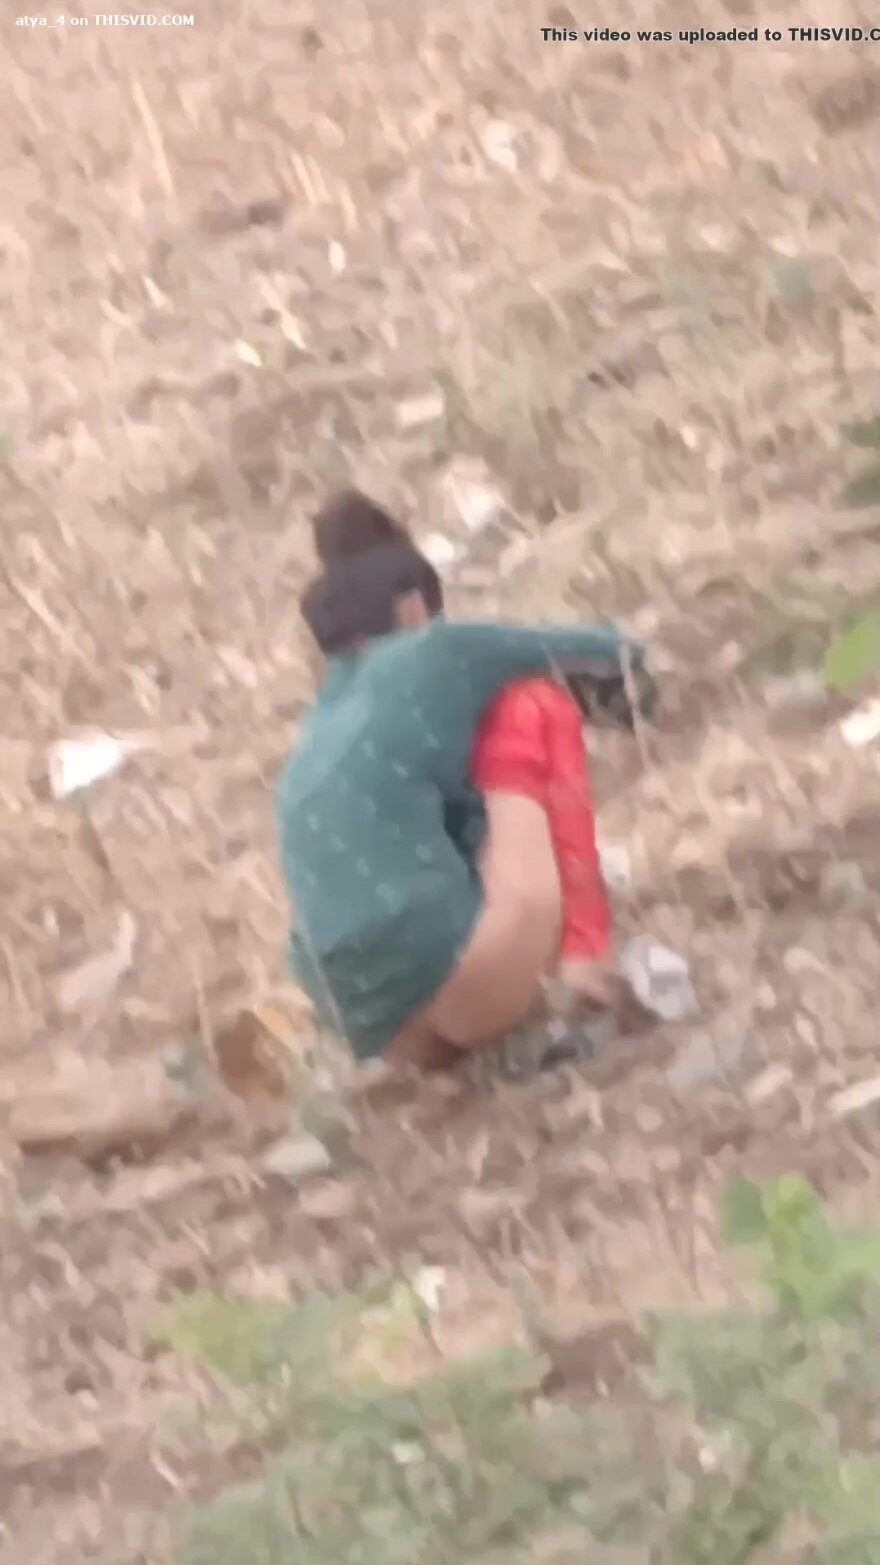 Village Girl Pee Out Door Pron - Village girl outdoor shitting video - ThisVid.com